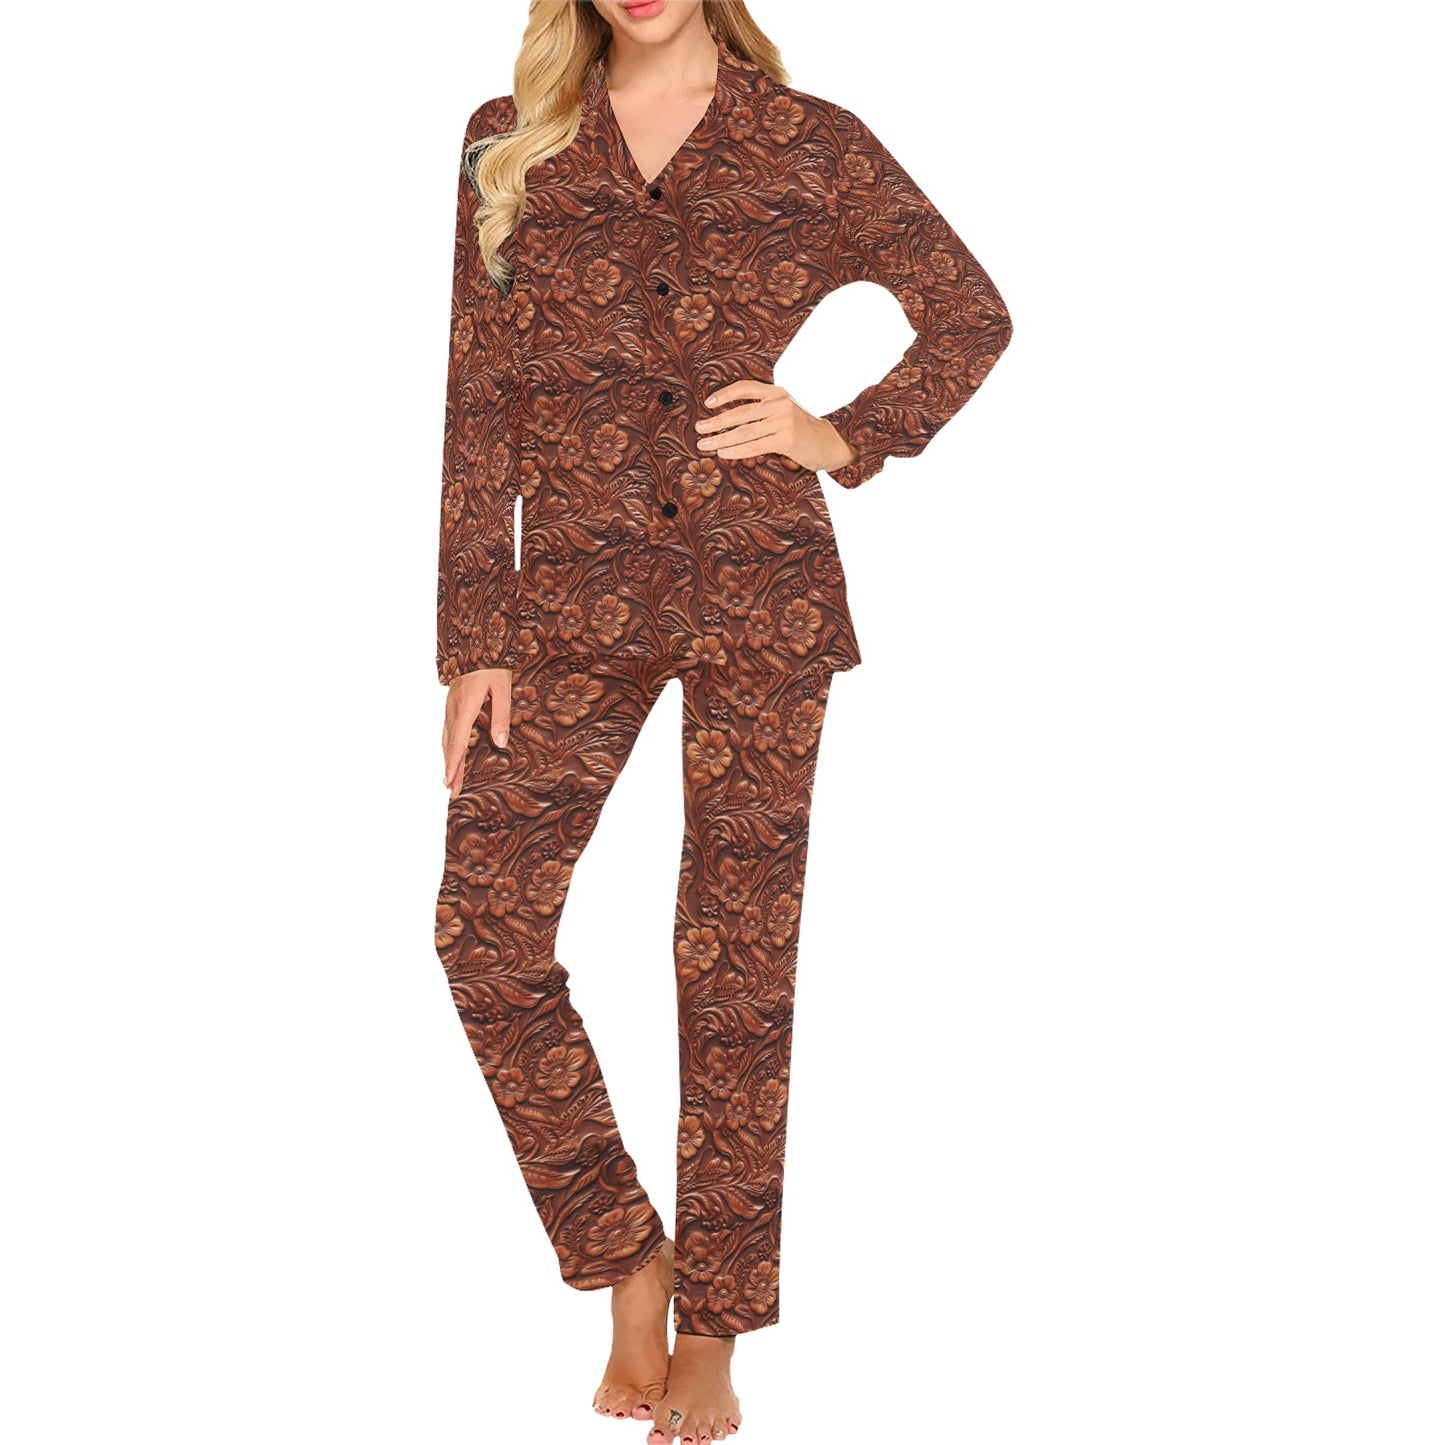 Leather Floral Print Women's Long Pajama Set